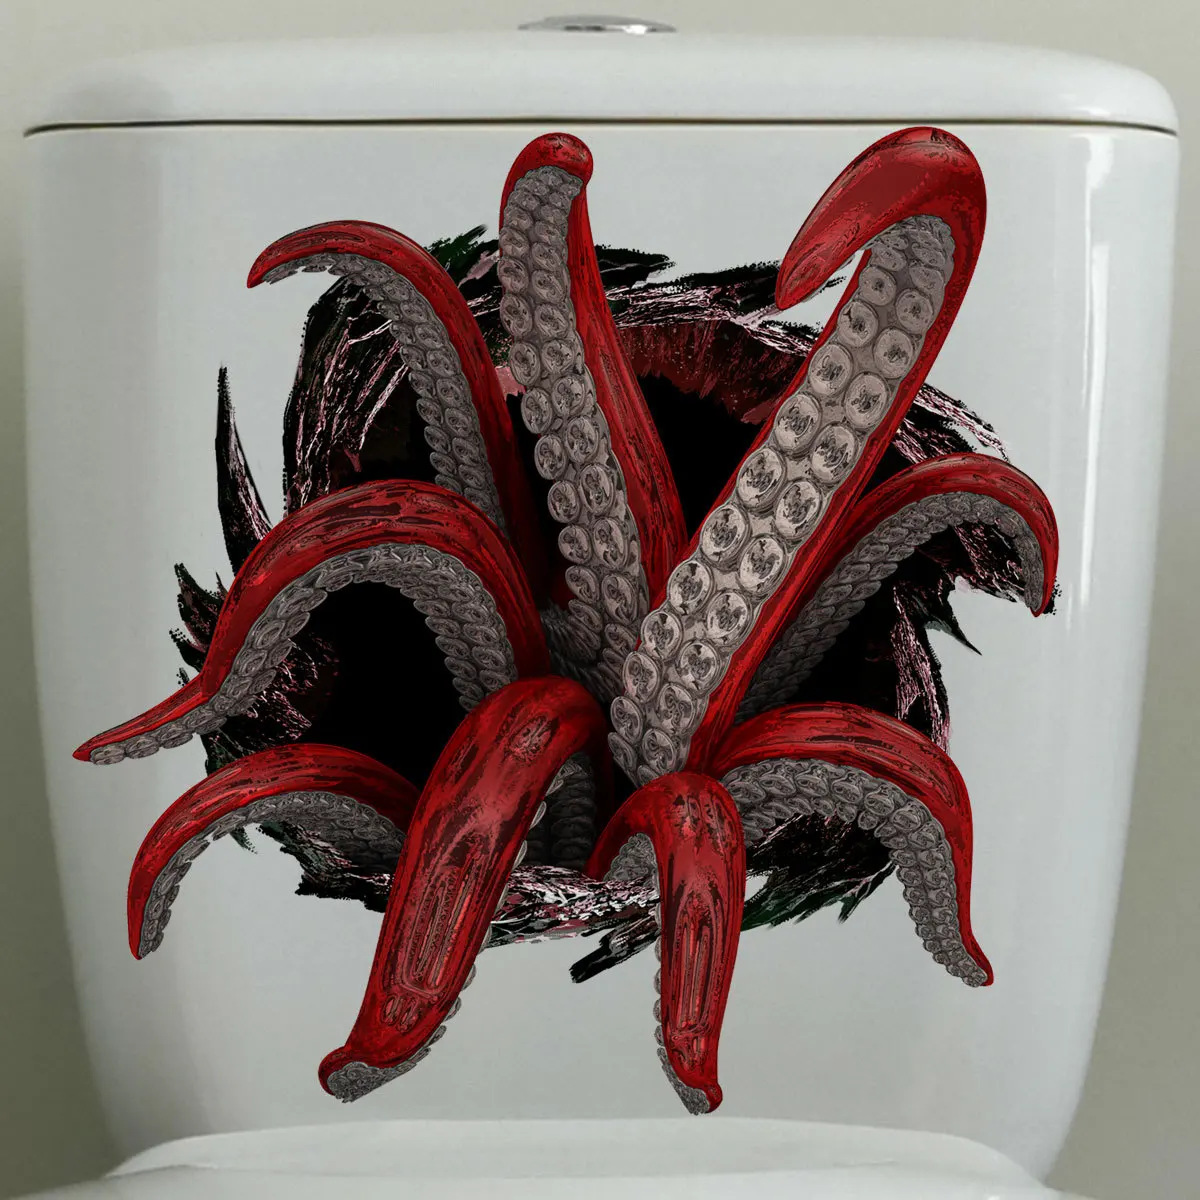 Octopus 3D Wall Stickers Creative Animal Decals Fridge Toilet Stickers Waterproof Wallpaper Room Decor Aesthetic Wallstickers images - 6